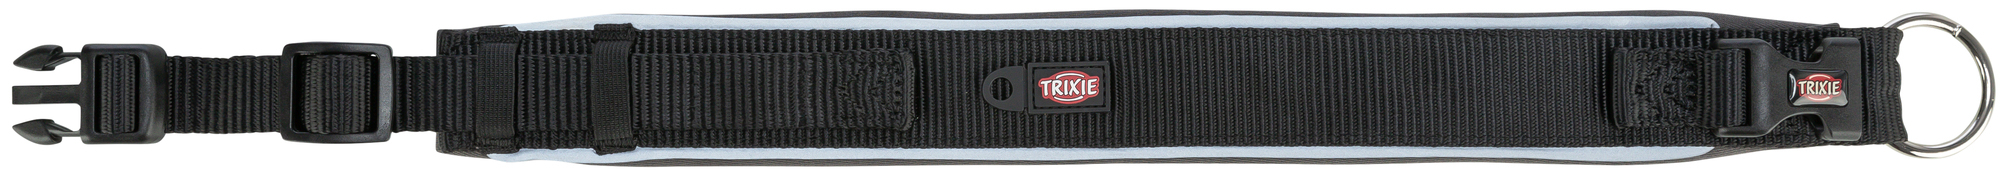 Trixie Premium coleira extra large - Preta/Cinza Graphite